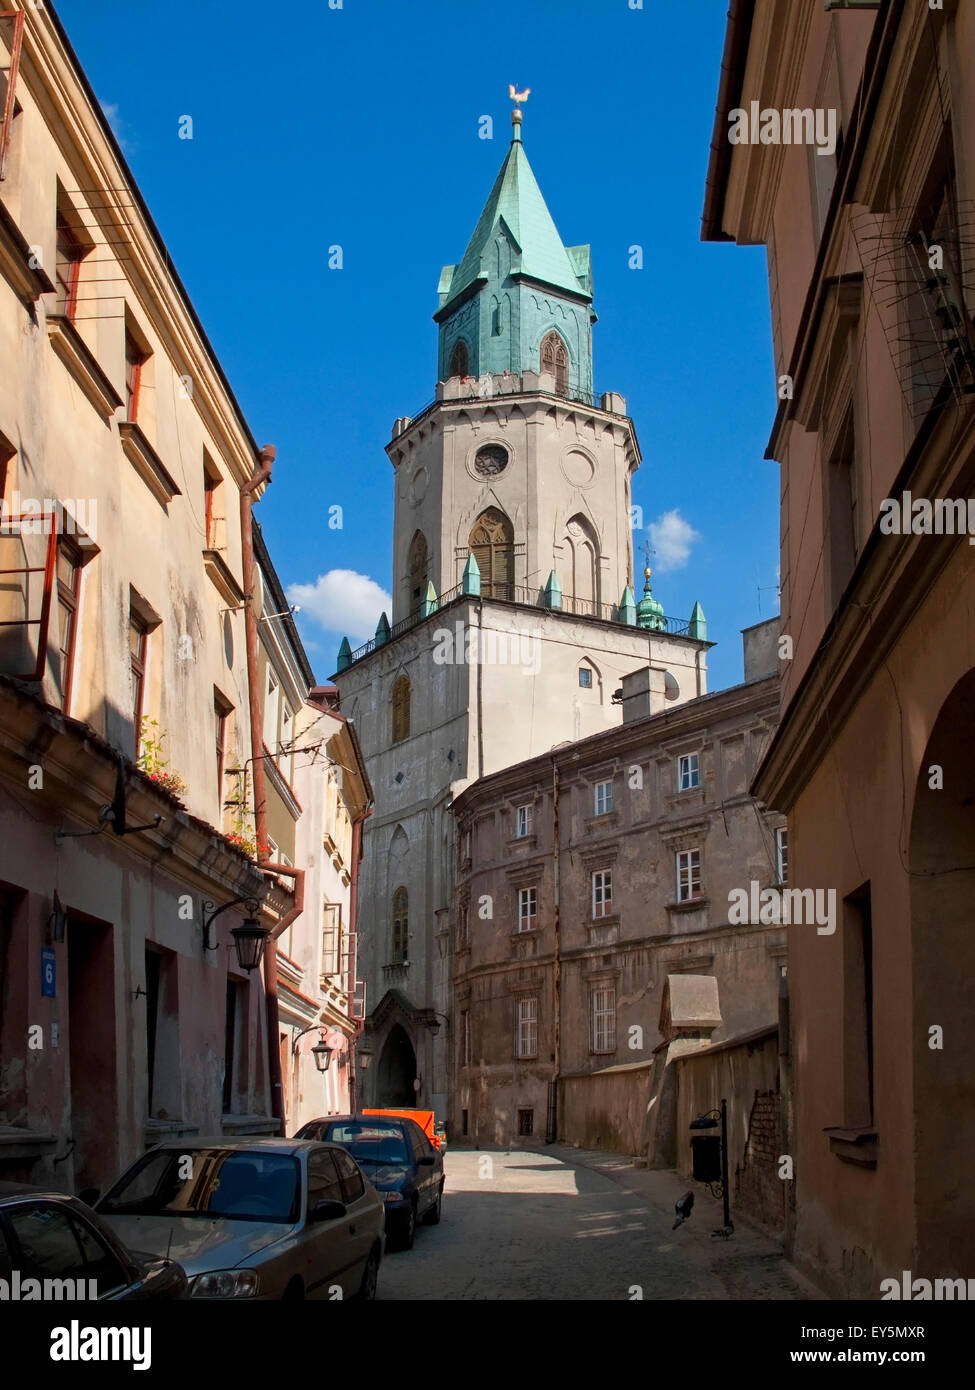 Trinitarian Tower, Lublin, Poland Stock Photo